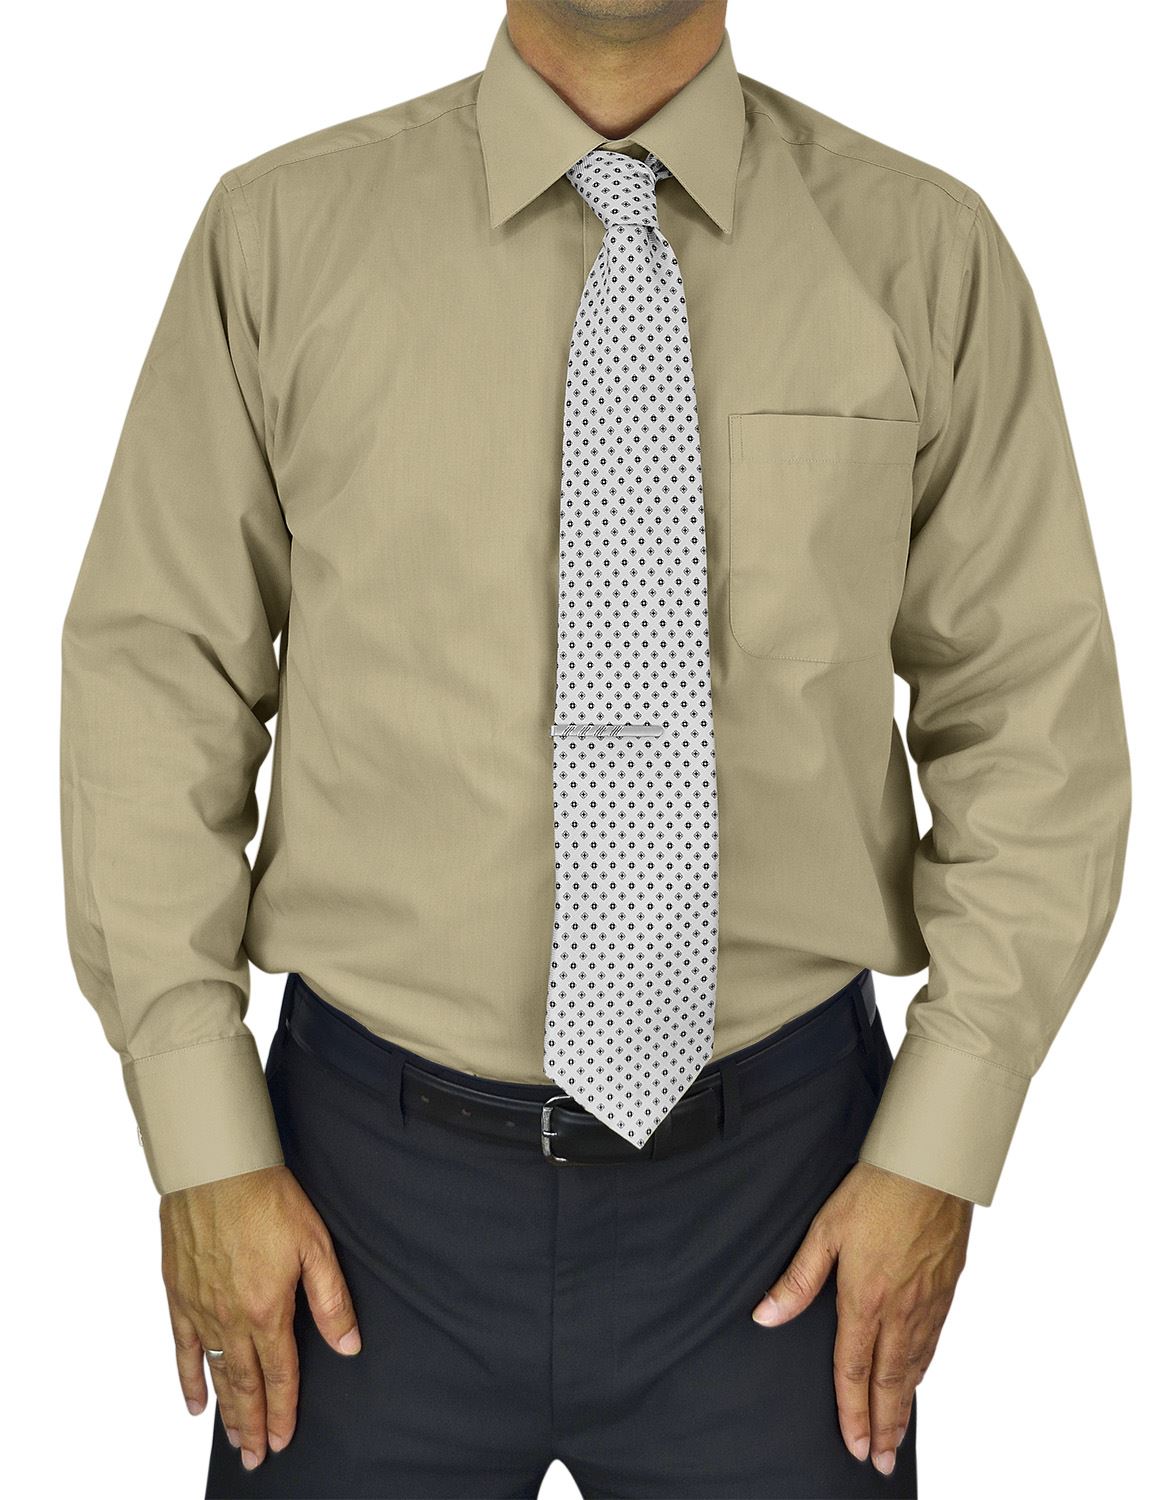 Moda Di Raza Mens Dress Shirt, French Cuff Shirt, Slim and Regular Fit, Dress Shirt For Men, Cufflink Shirts For Men - Tan-Reg-Fit 14.5